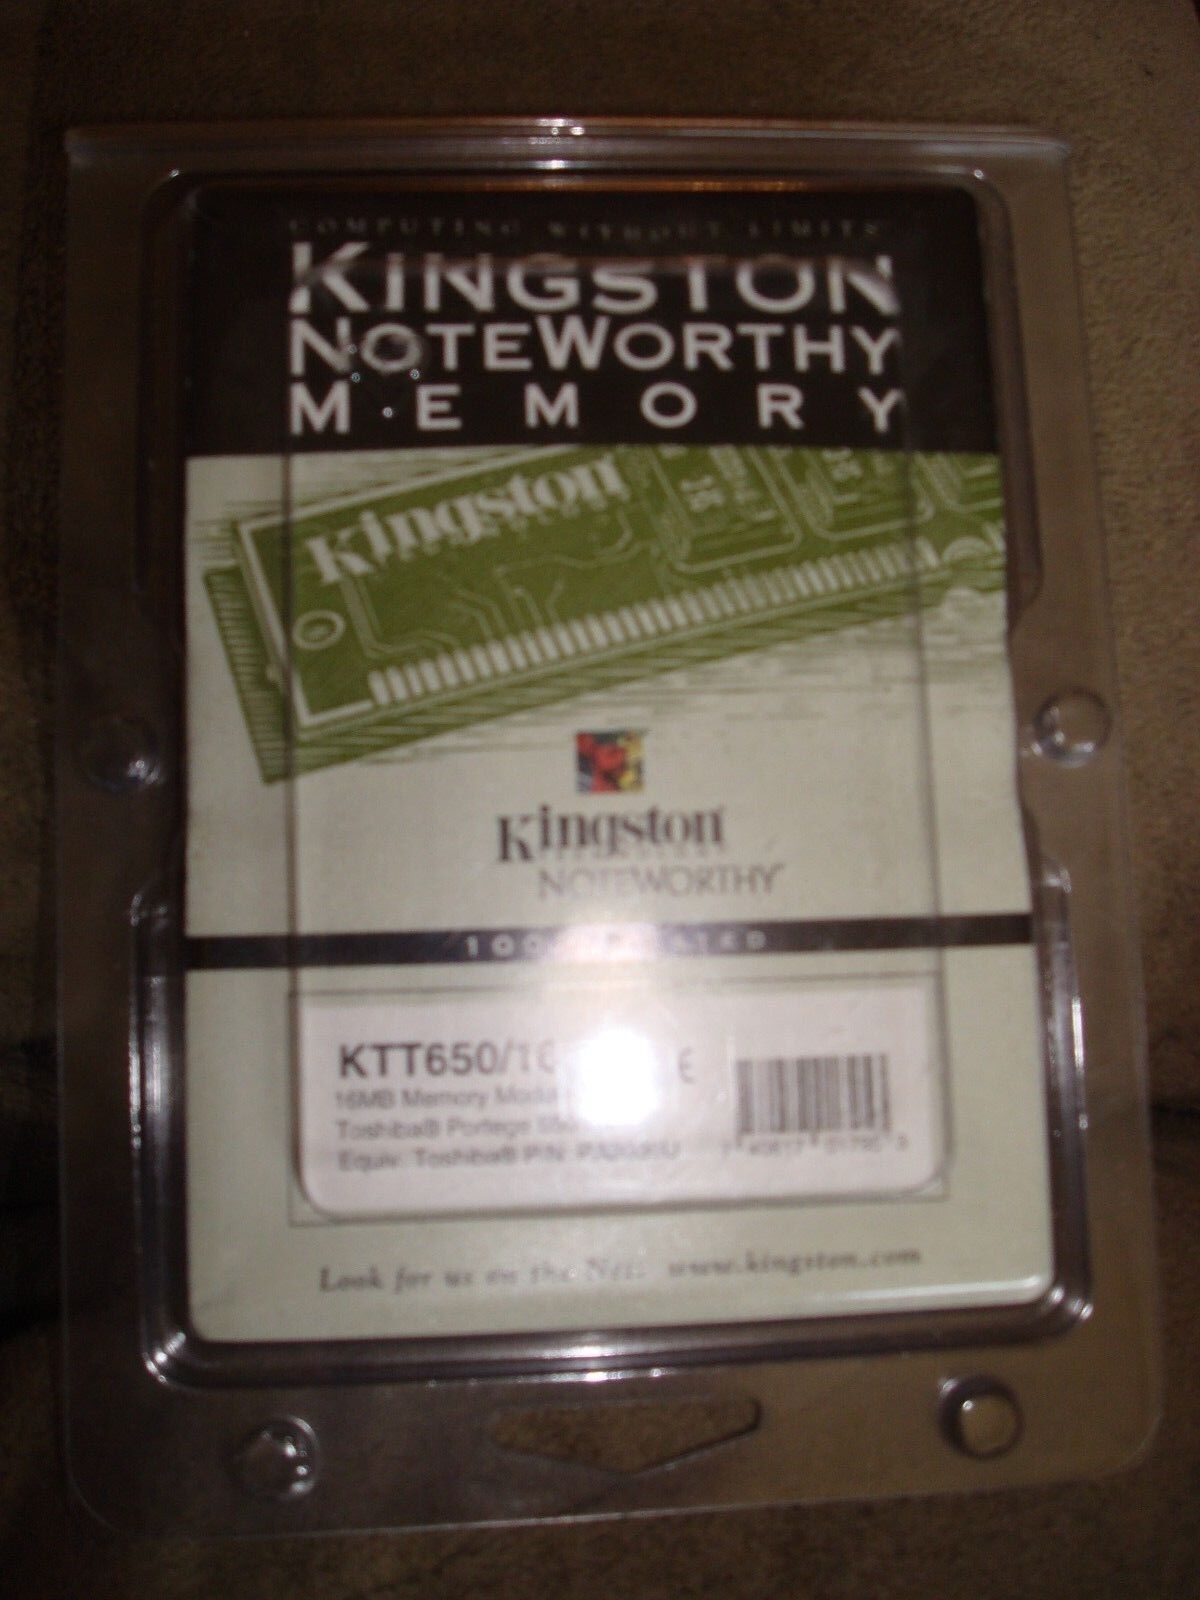 KINGSTON NOTEWORTHY MEMORY 16 MB